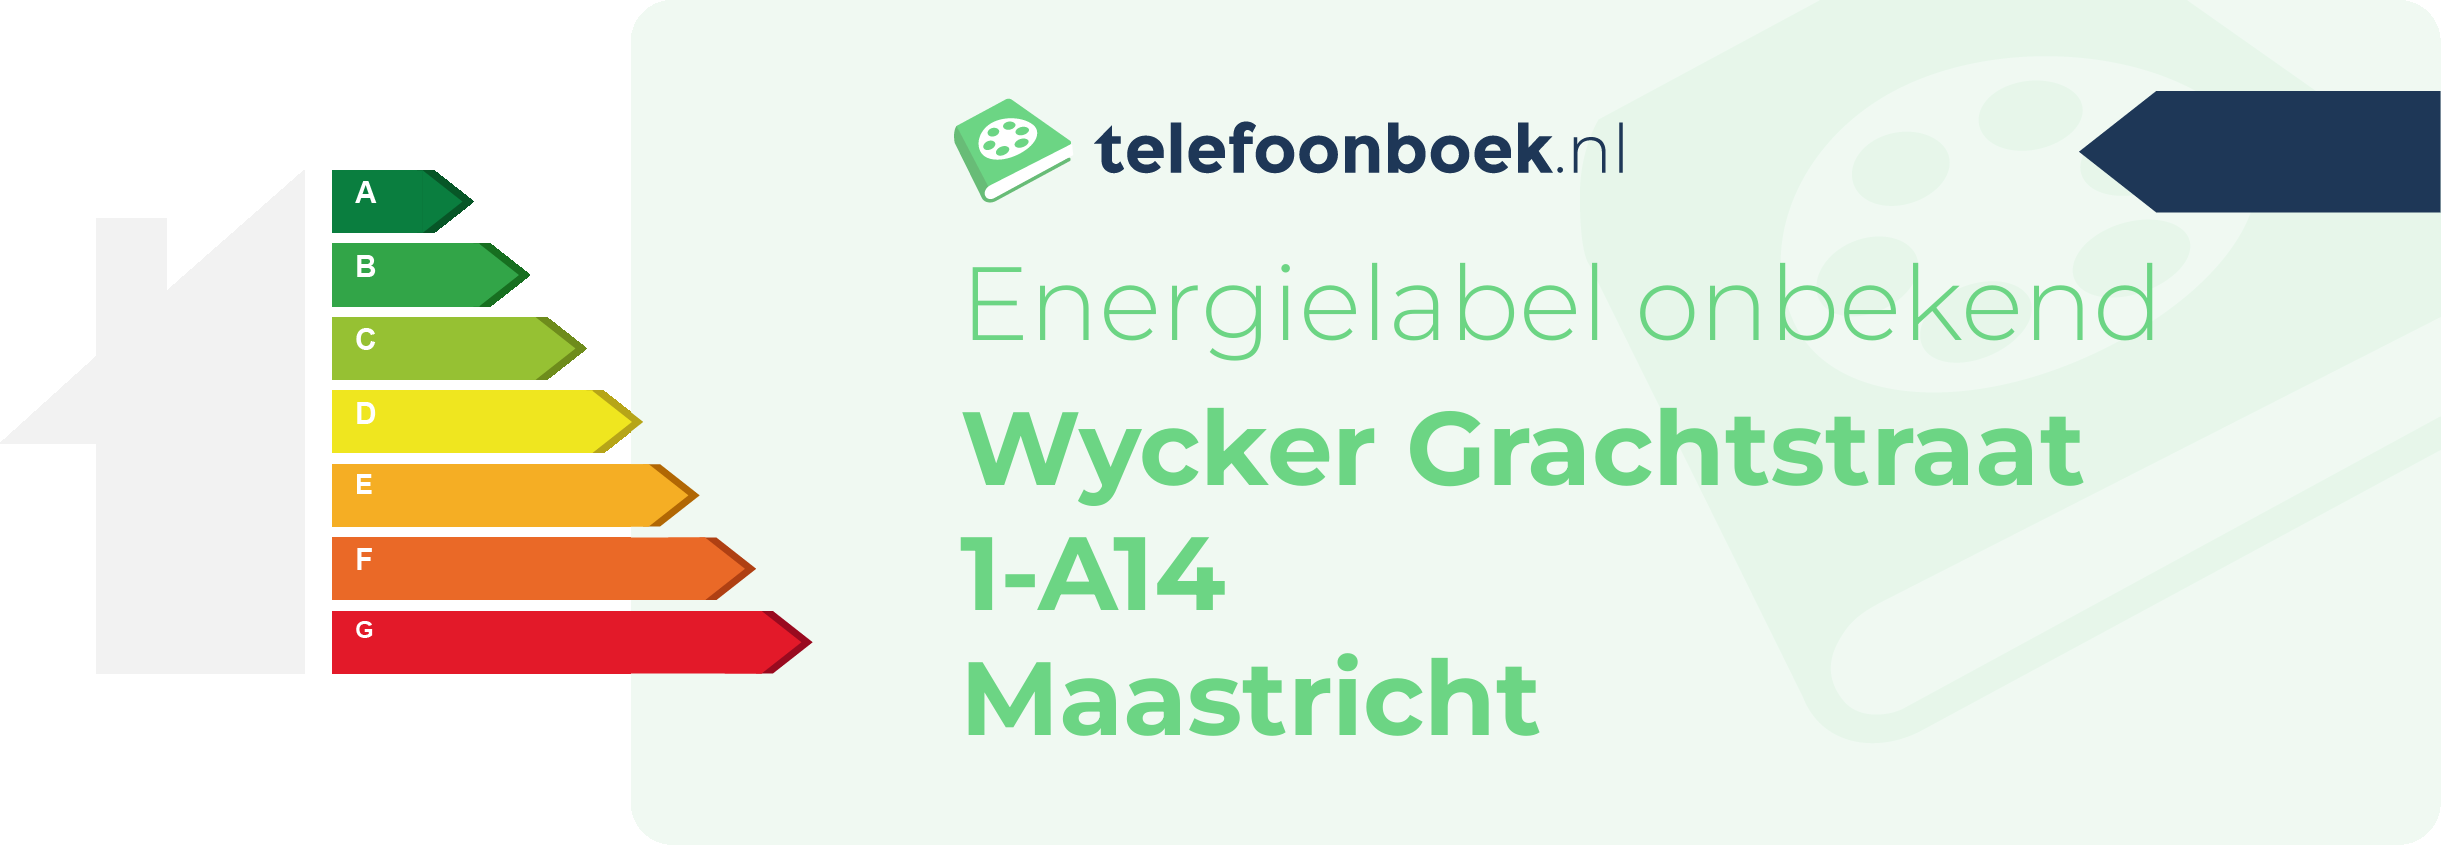 Energielabel Wycker Grachtstraat 1-A14 Maastricht